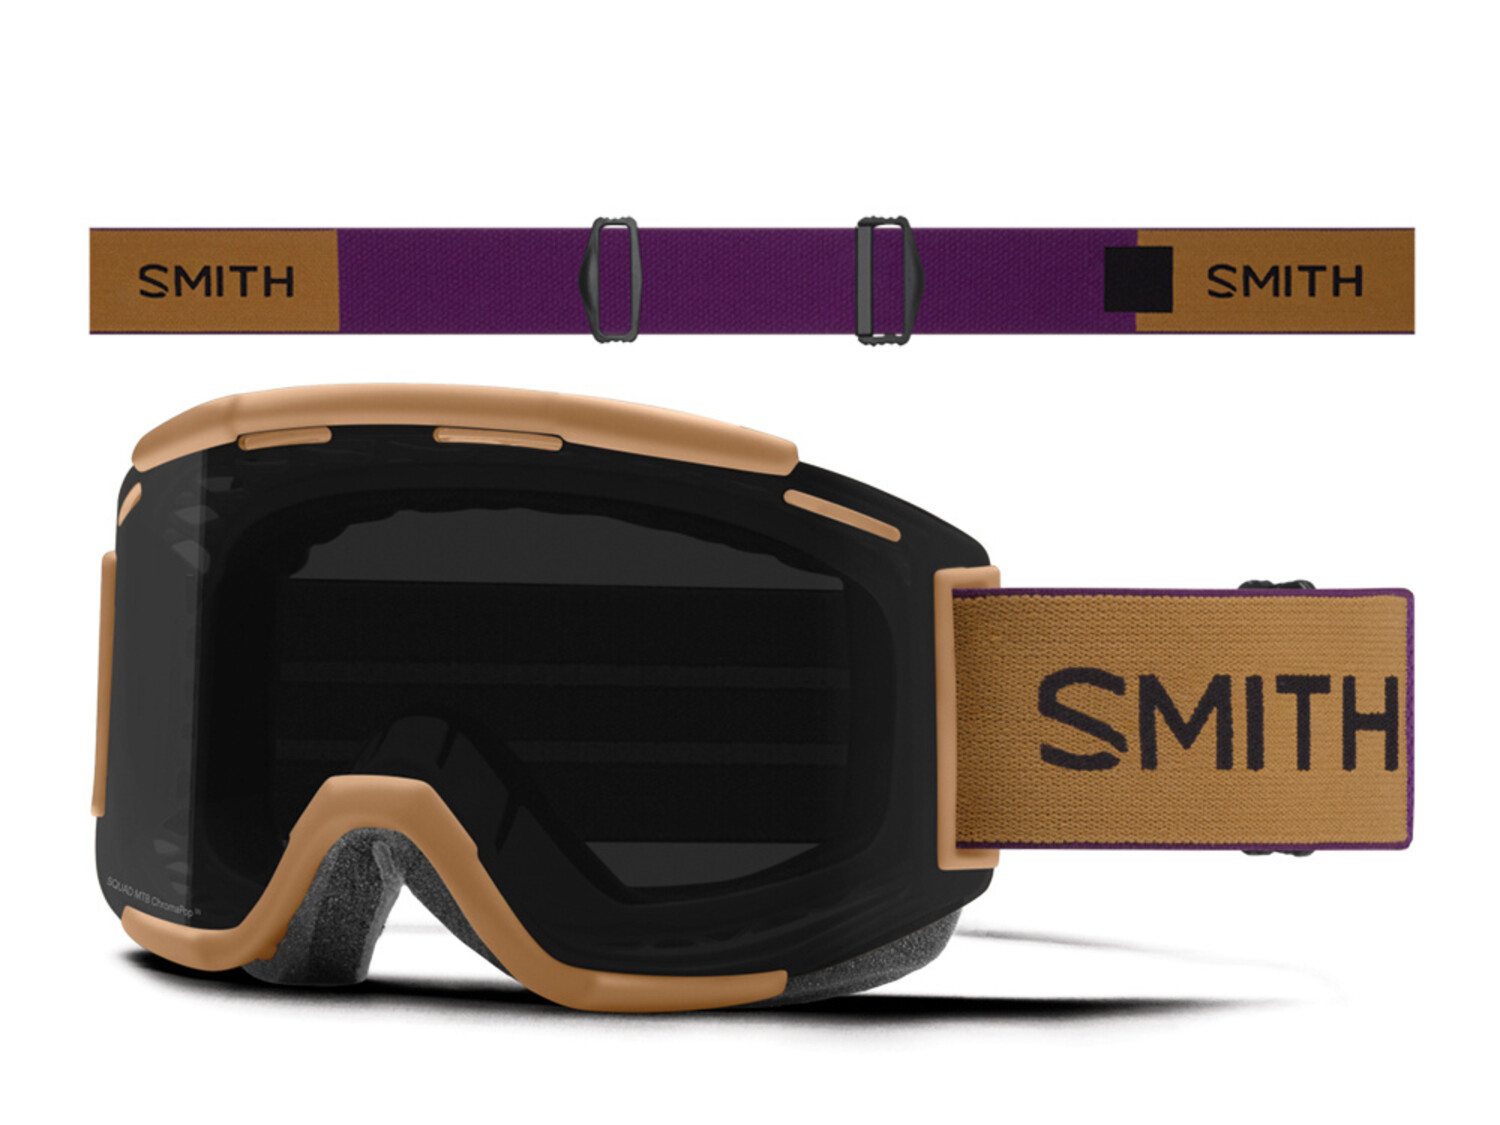 Smith SQUAD - スキー・スノーボードアクセサリー